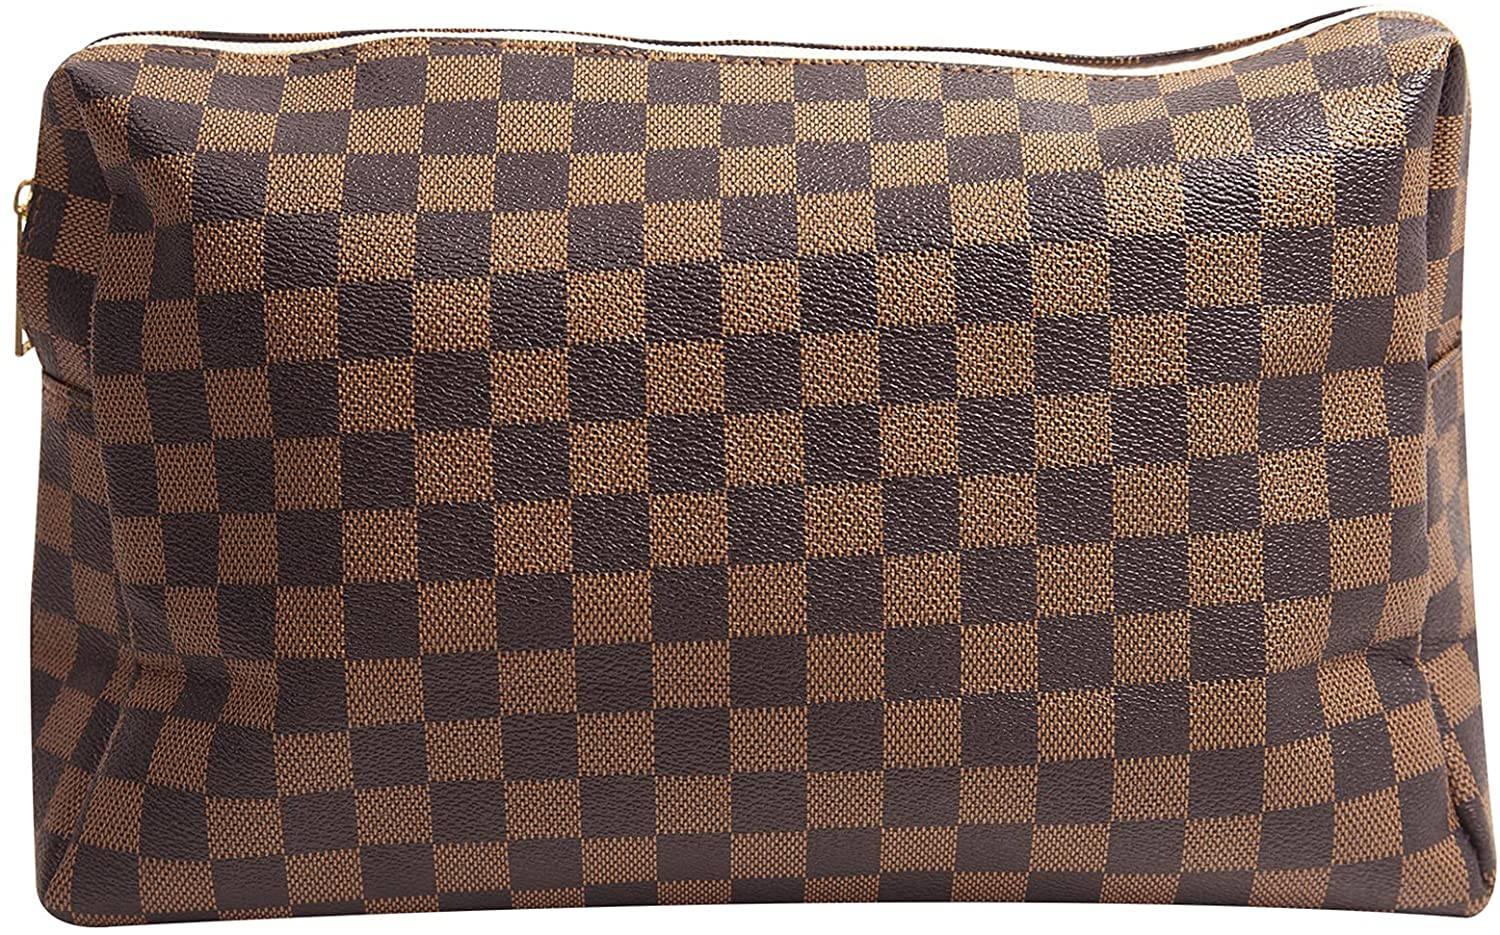  EVDIAGD Large Checkered Brown Makeup Bag - Retro